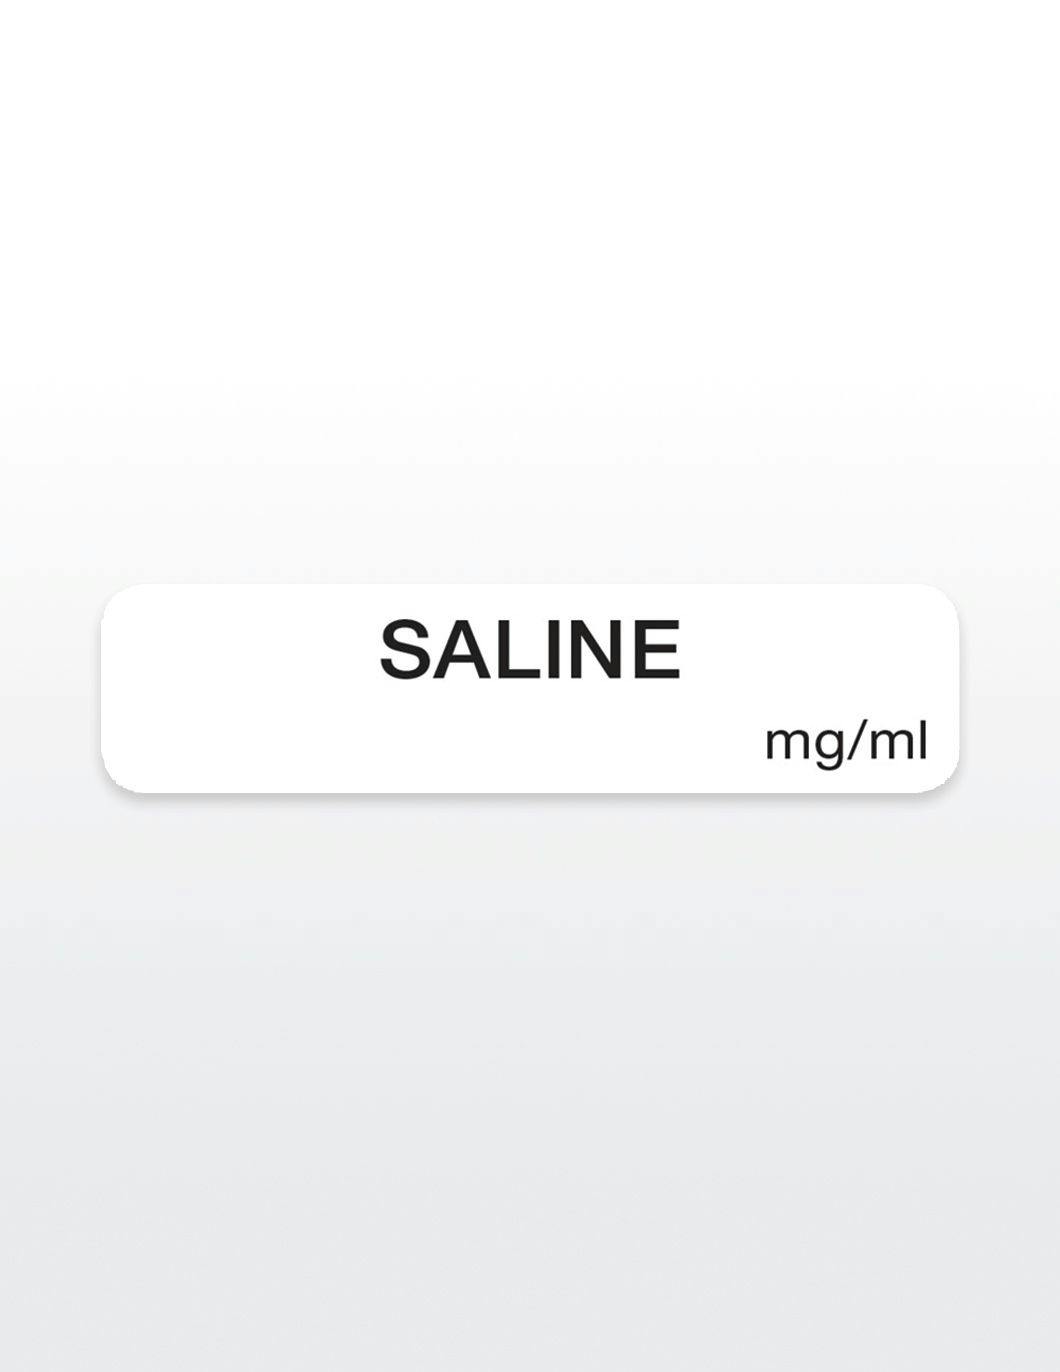 saline-drug-syringe-stickers